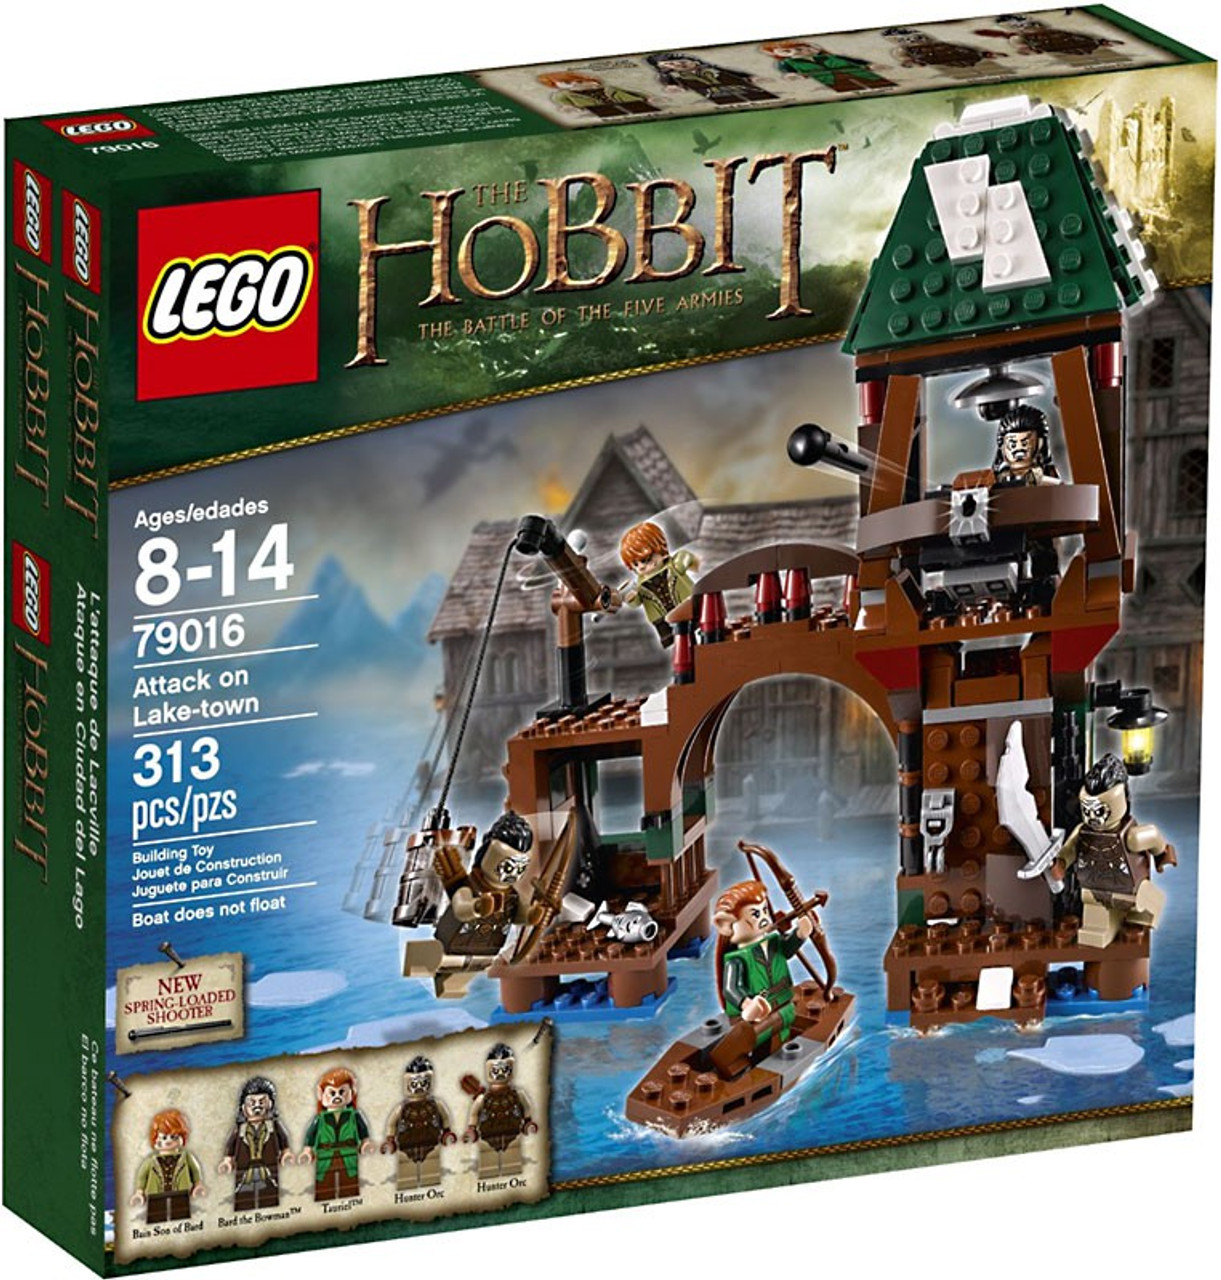 download free lego hobbit battle of five armies